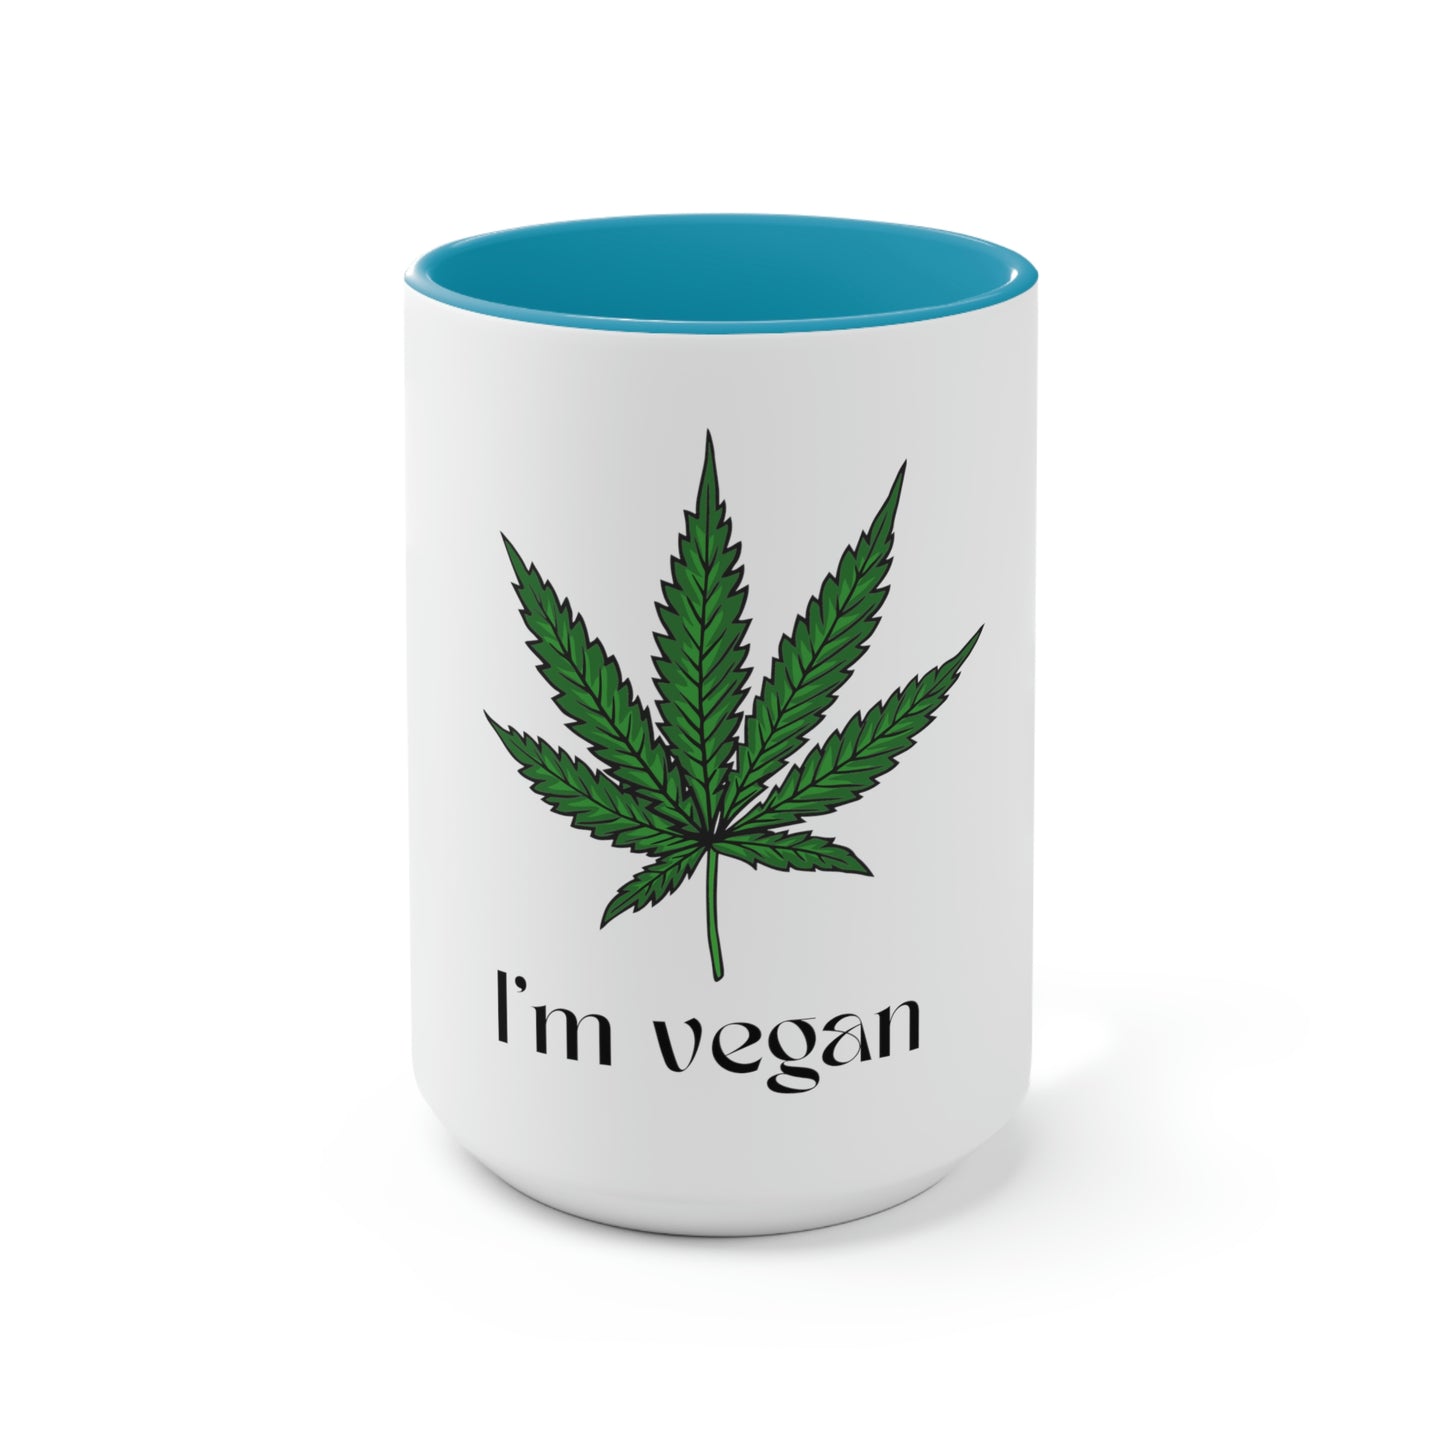 A white and light blue "I'm vegan" cannabis coffee mug on a white background